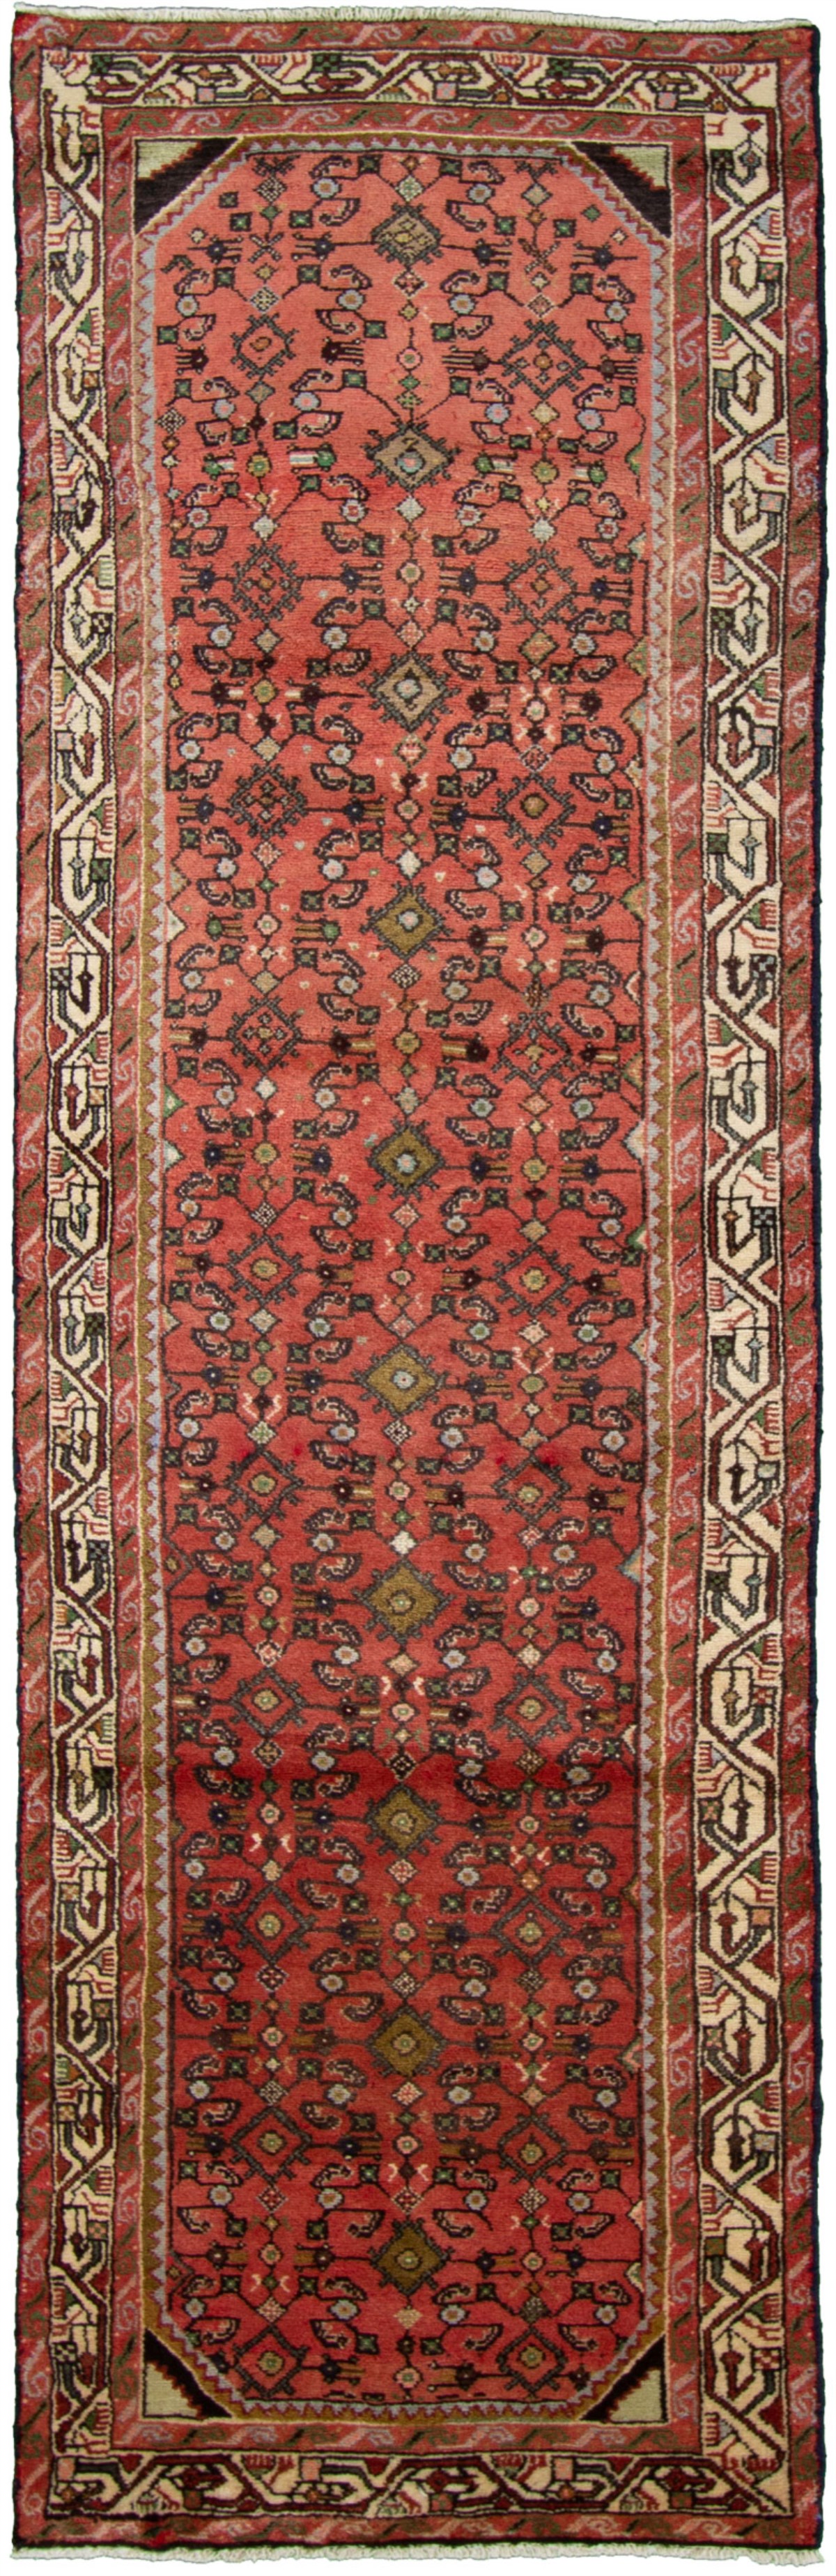 Hand-knotted Hamadan Dark Copper Wool Rug 2'11" x 9'6" Size: 2'11" x 9'6"  